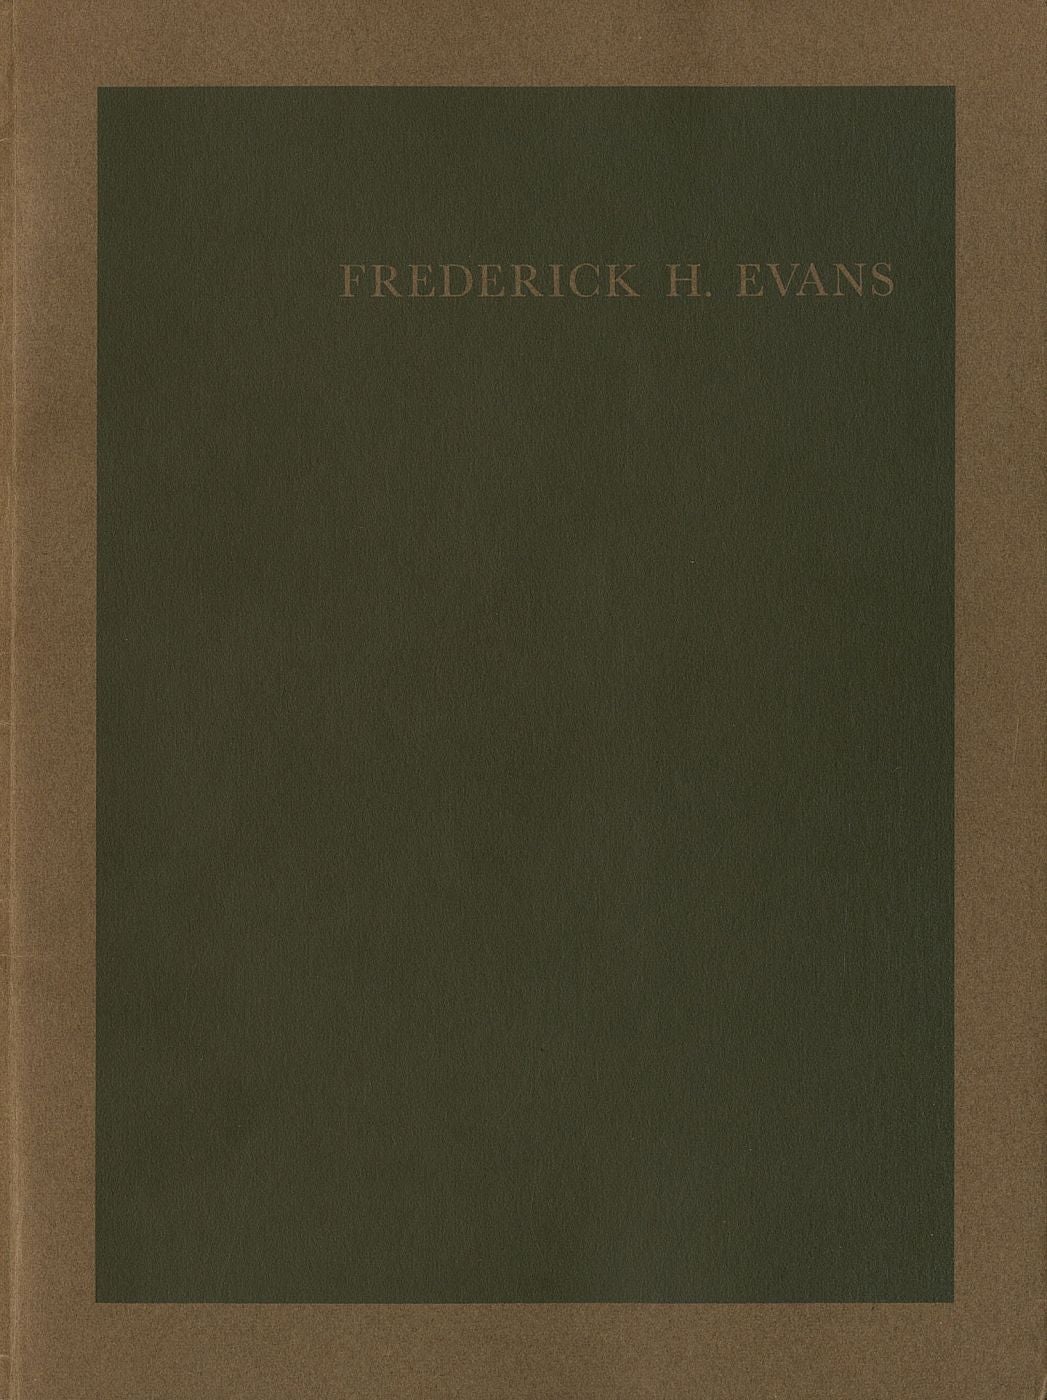 Frederick H. Evans (George Eastman House Image Monograph Number 1)